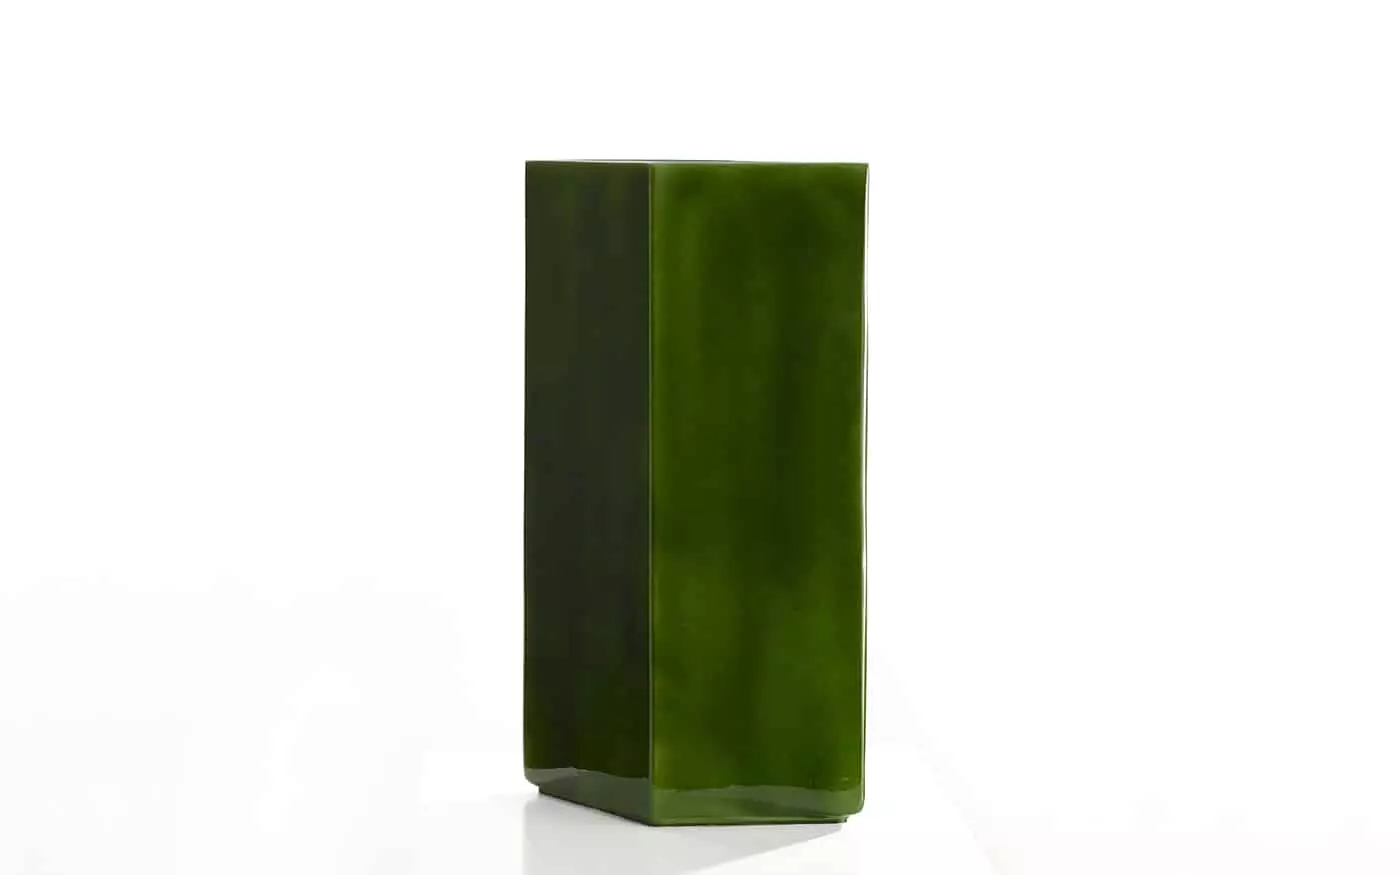 Vase Losange 84 green - Ronan & Erwan Bouroullec - Art and Drawing - Galerie kreo